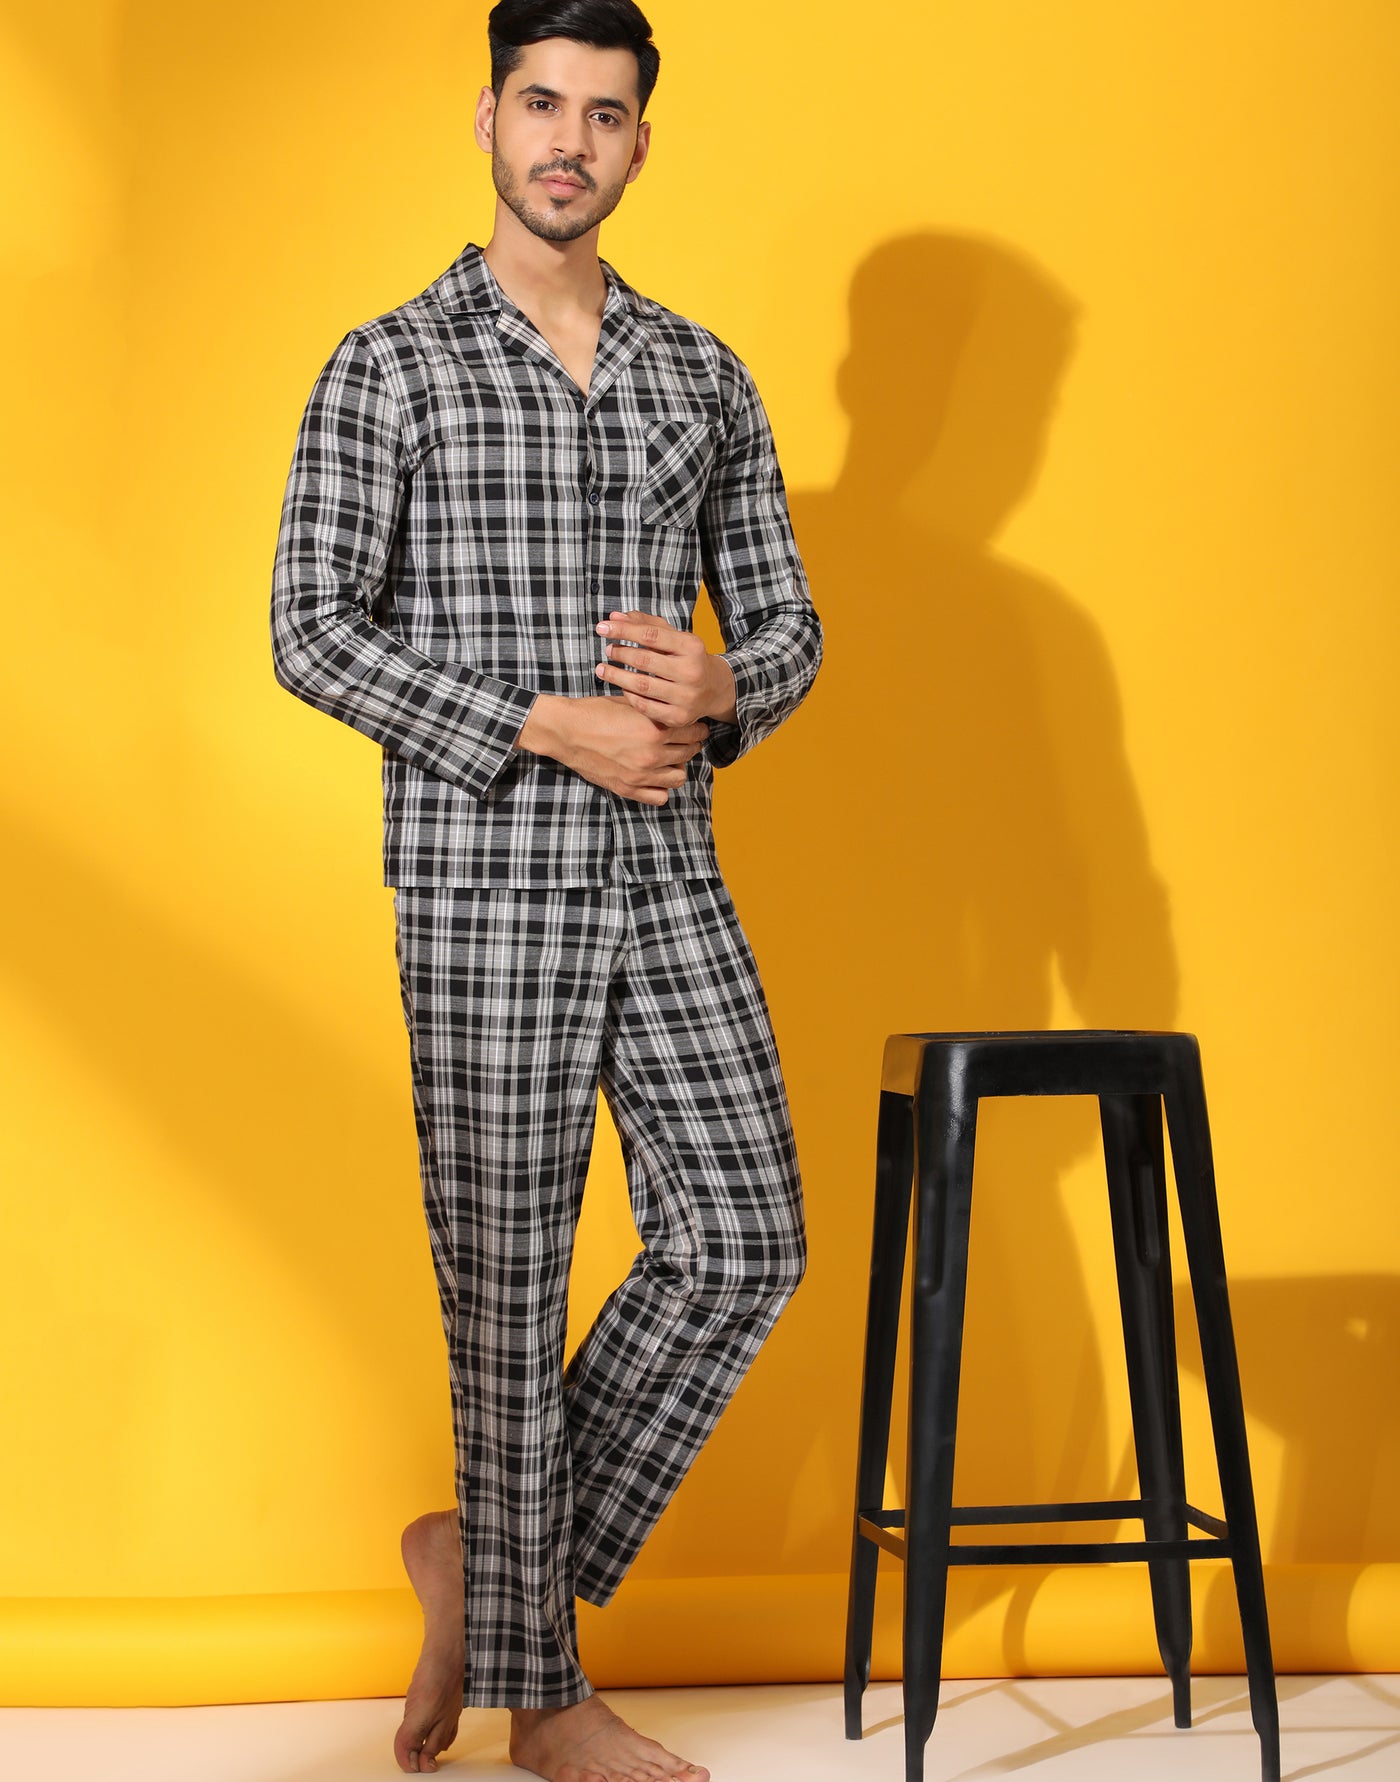 Pyjama Set for Men-Black & Grey Checks